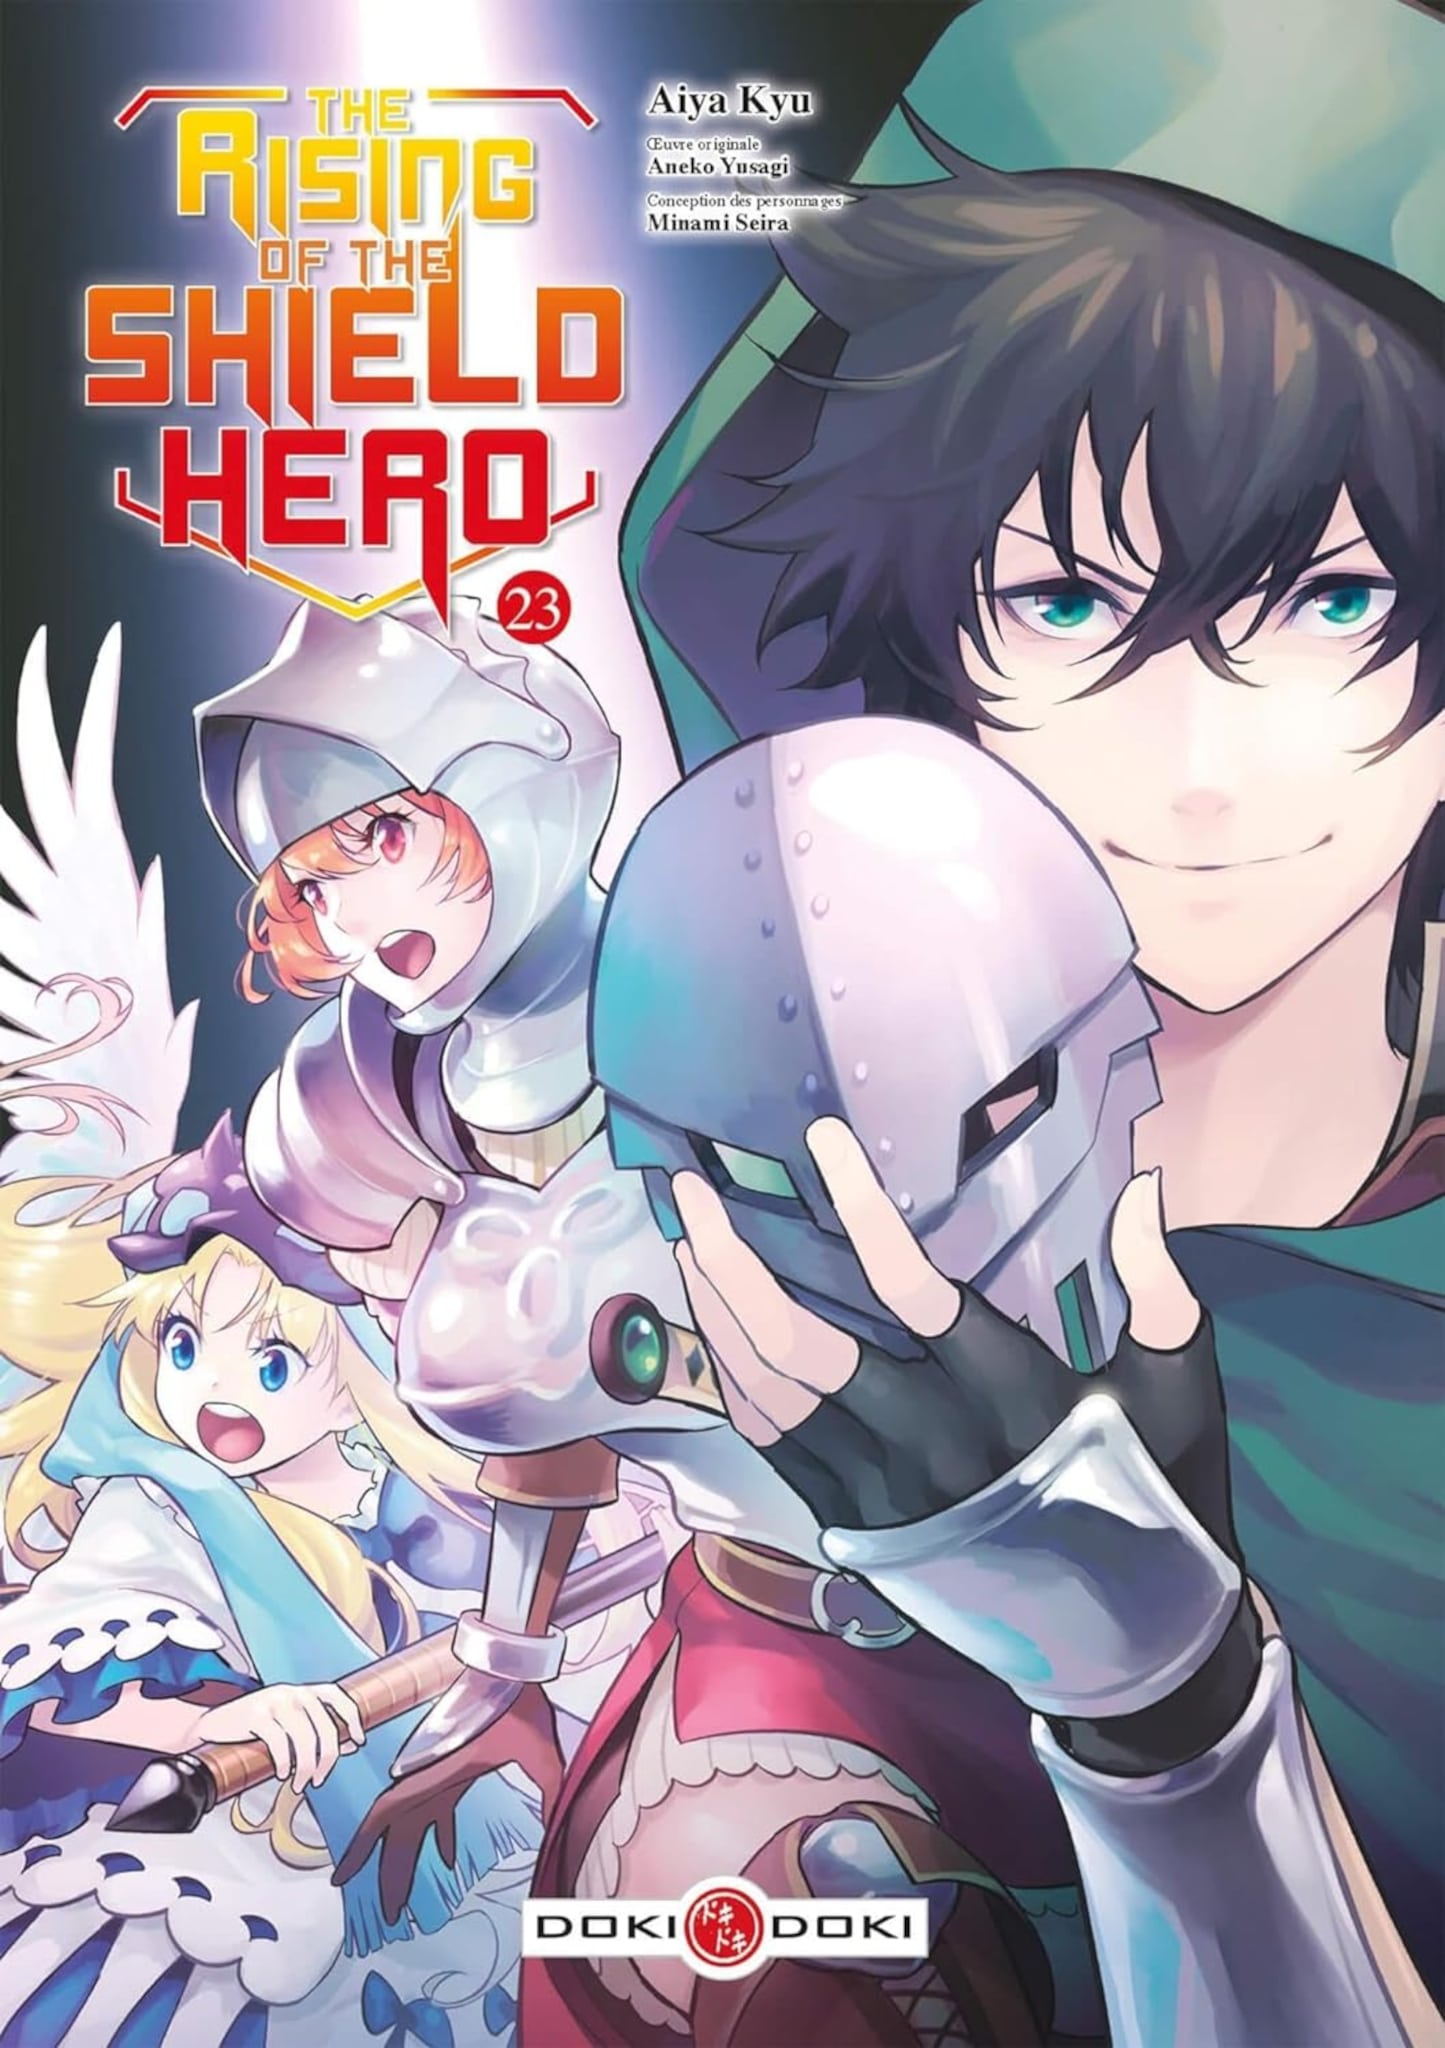 Tome 23 du manga The Rising of the Shield Hero